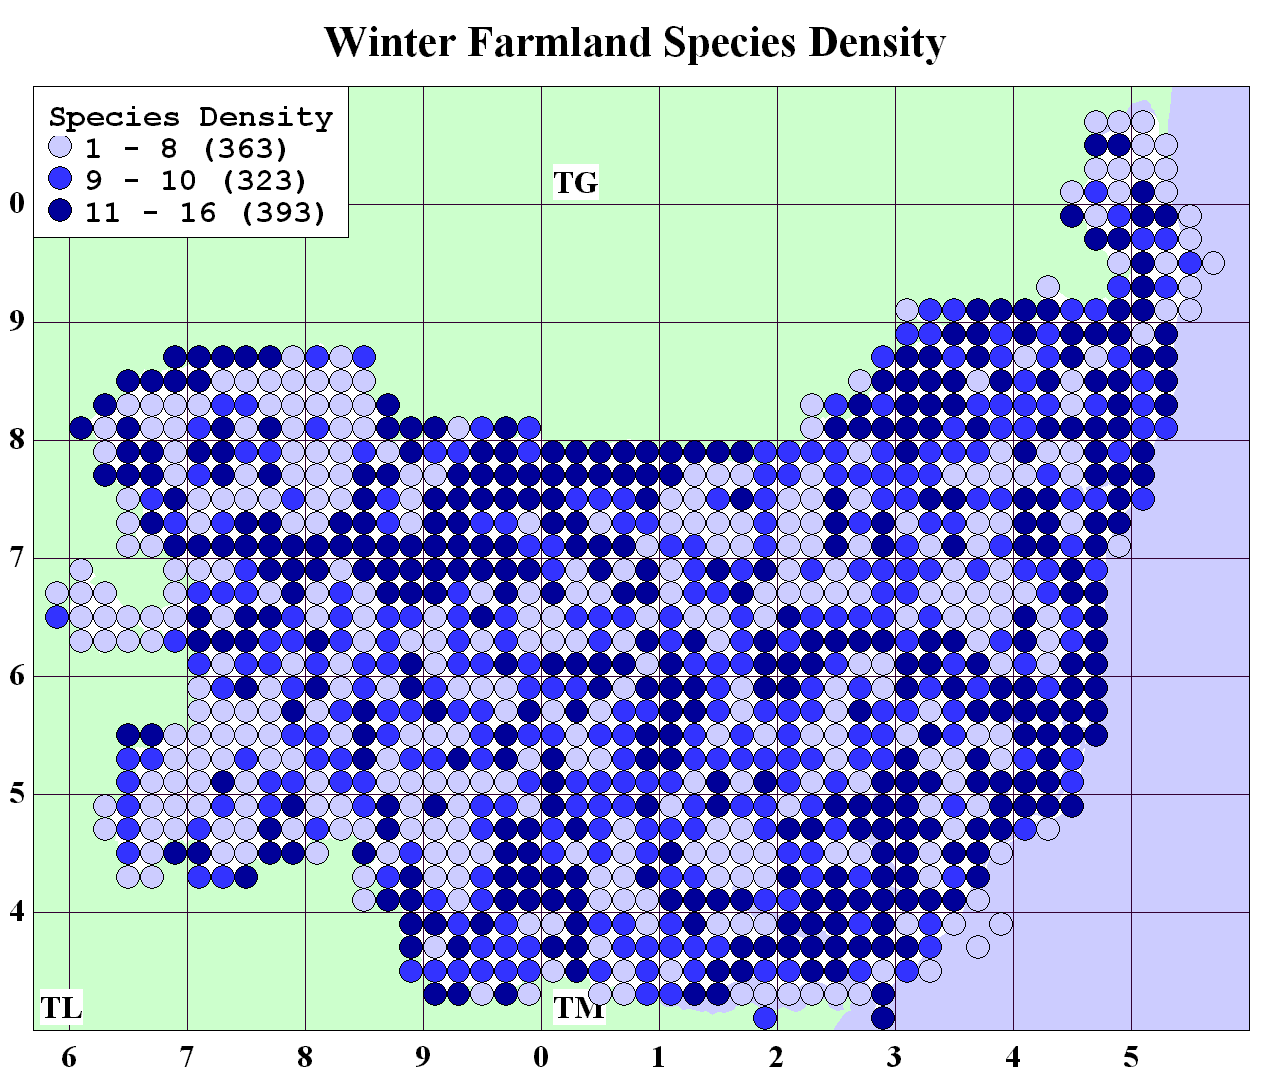 Winter farmland species density map